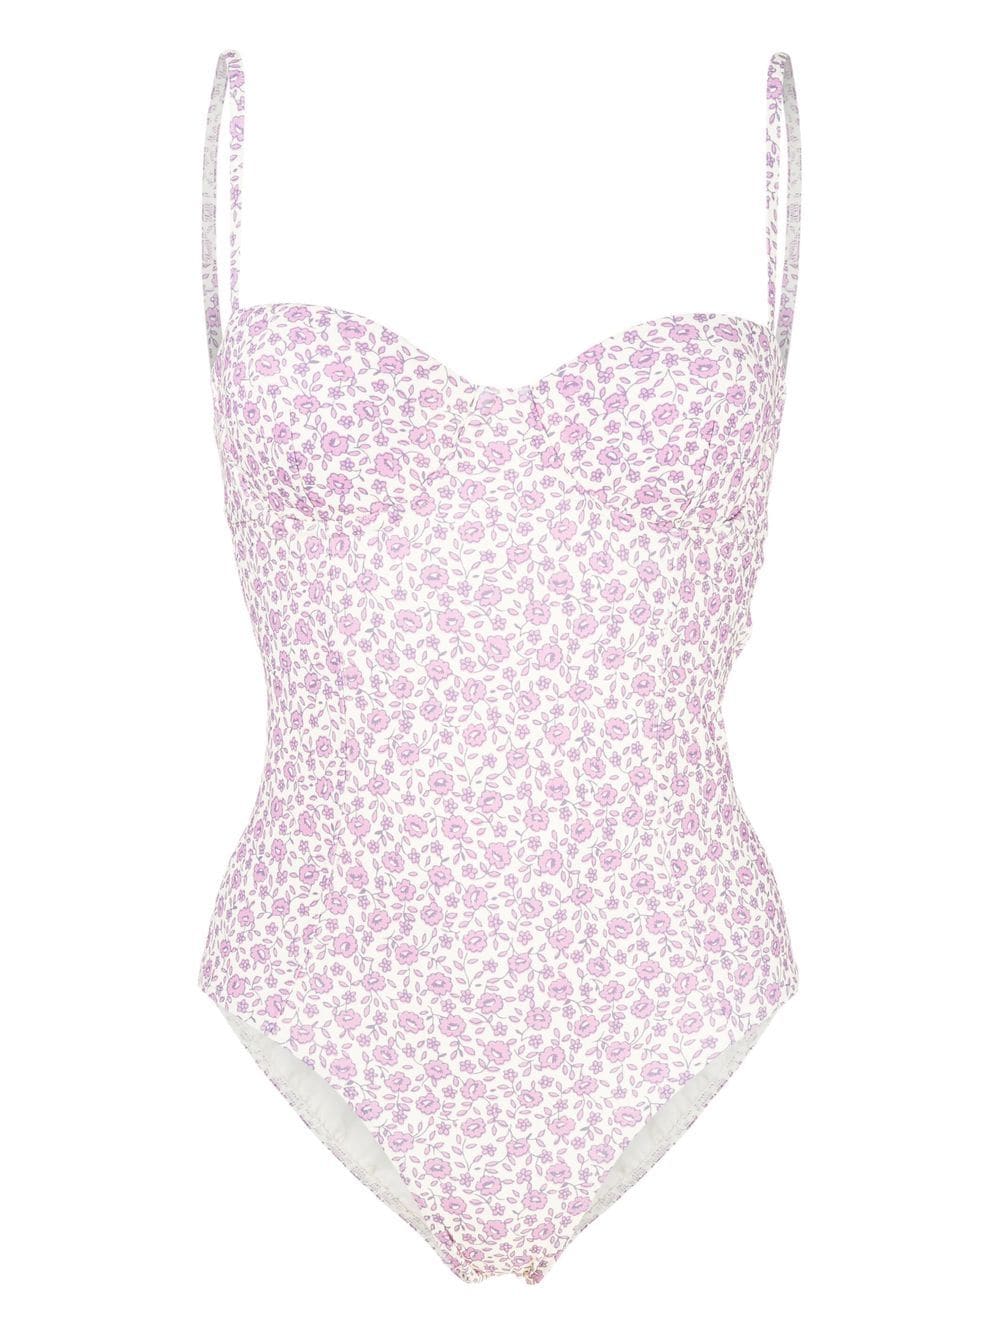 floral-print swimsuit